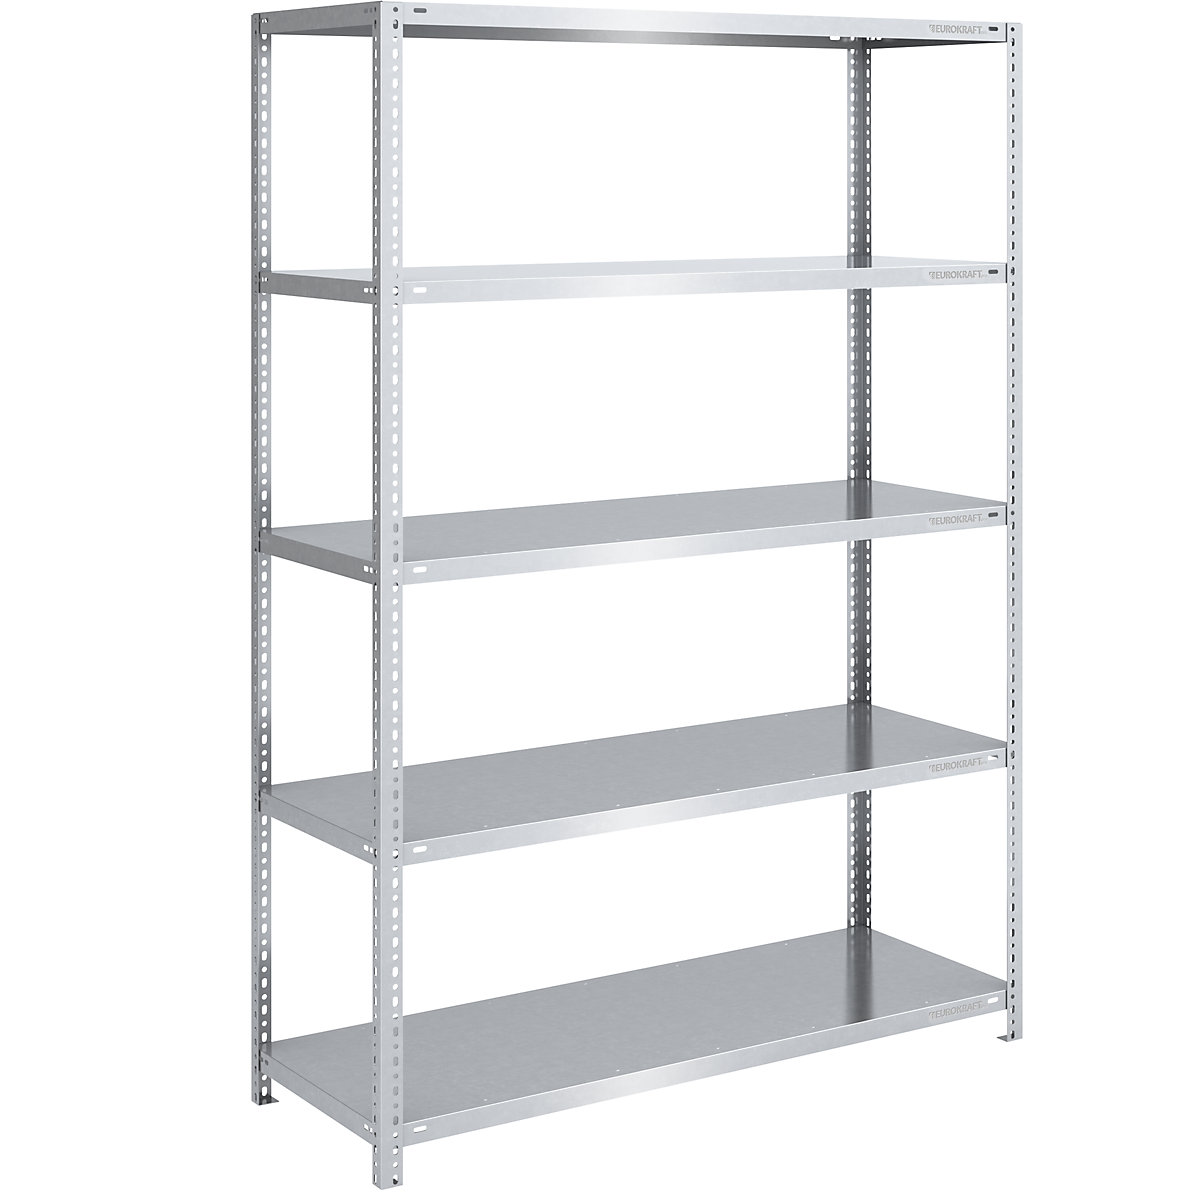 Bolt-together storage shelving, zinc plated, medium duty – eurokraft pro, shelf unit height 2000 mm, shelf width 1300 mm, depth 600 mm, standard shelf unit-5